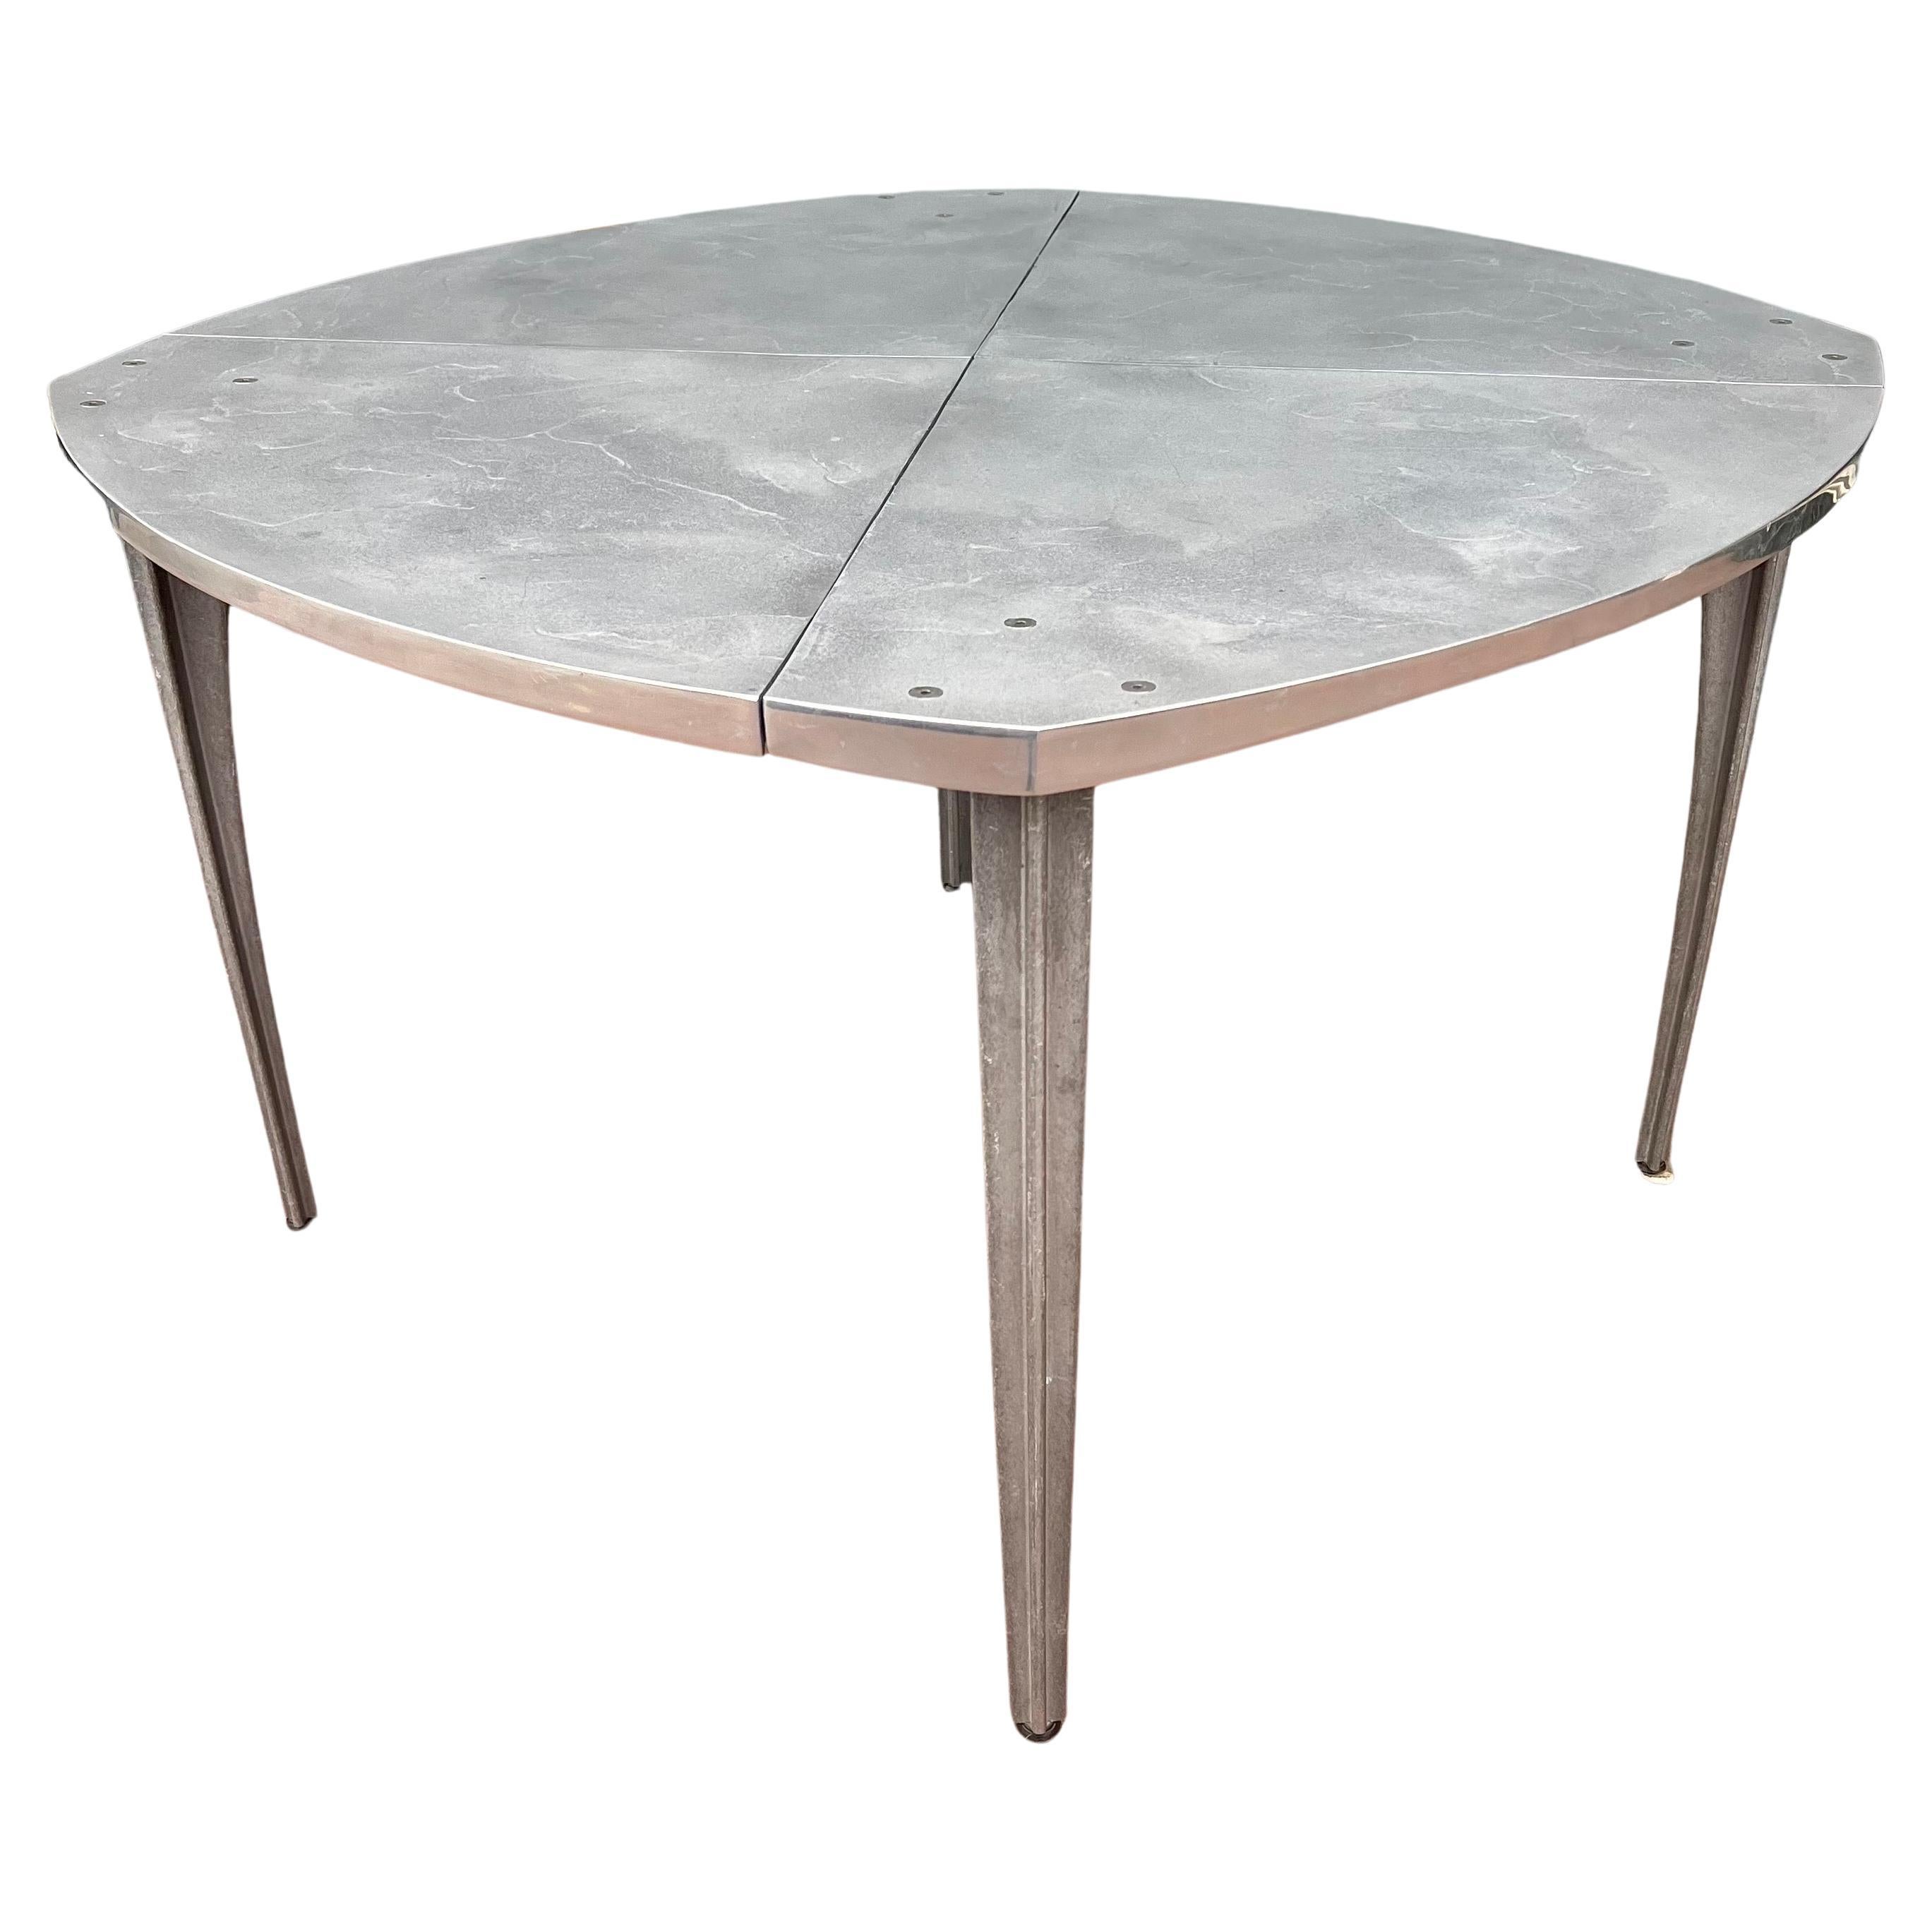 Robert Josten Industrial Design Rare Dining Table California Design